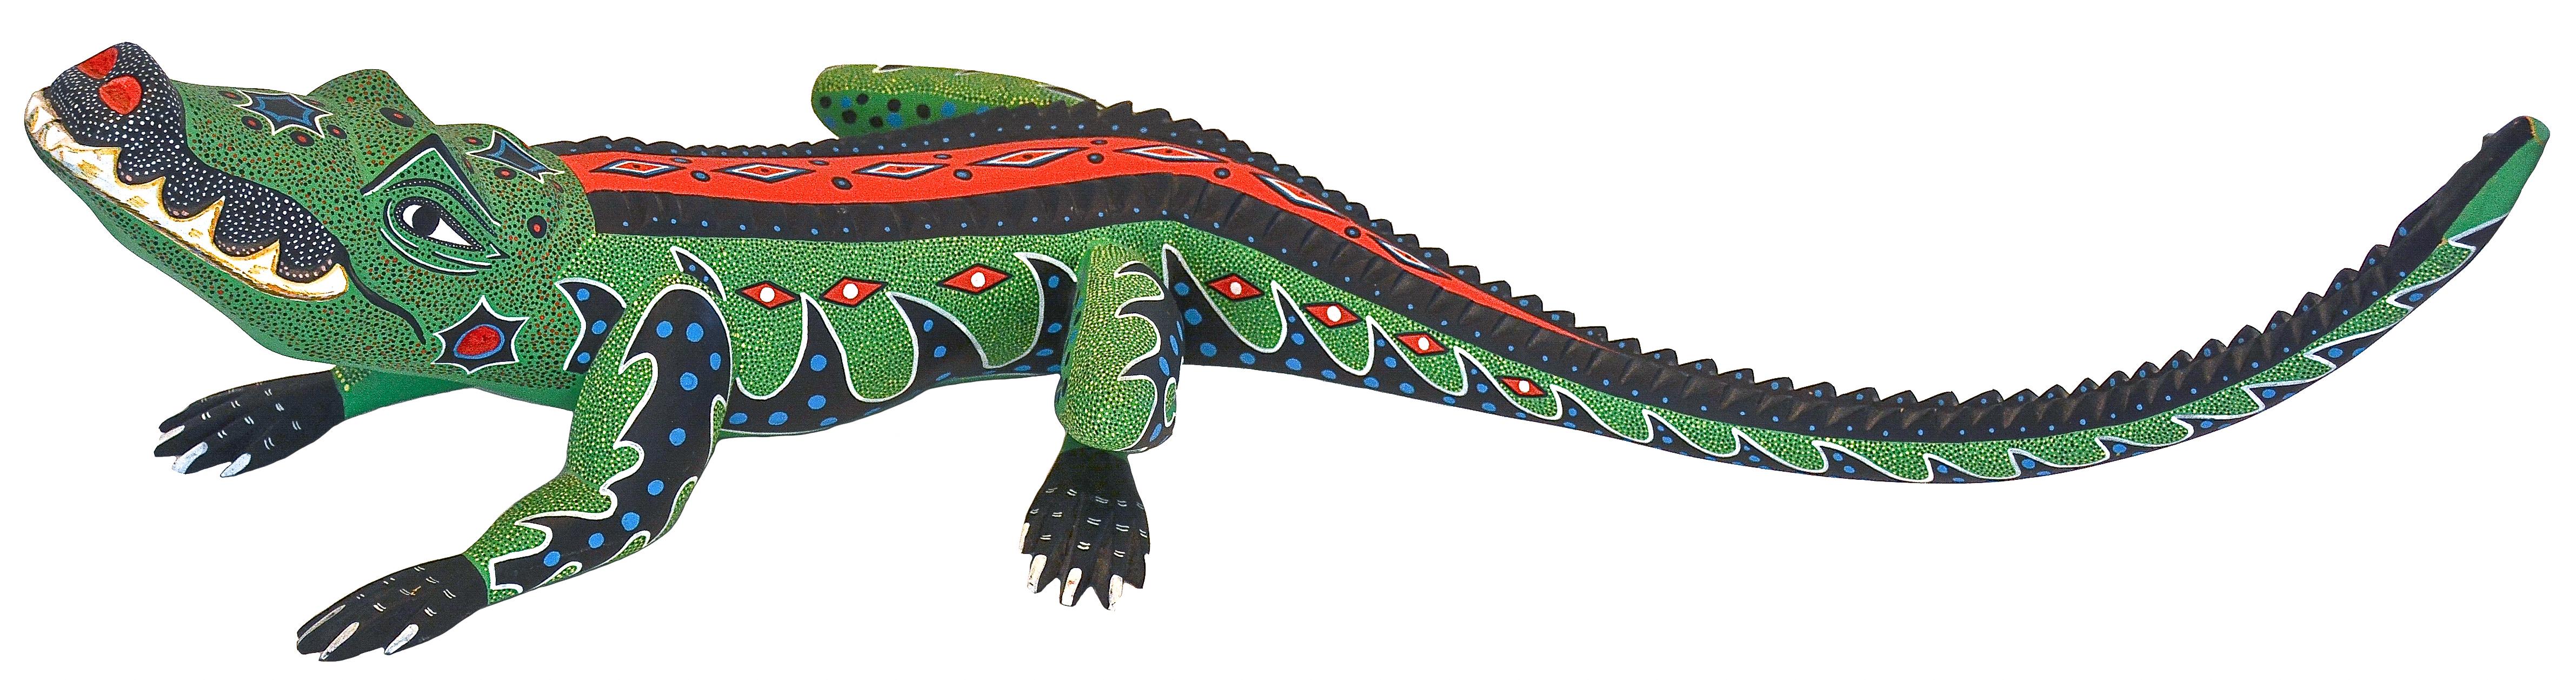 Vintage Alligator by Oaxacan Master Carver Gerardo Ramirez Morales For Sale 1